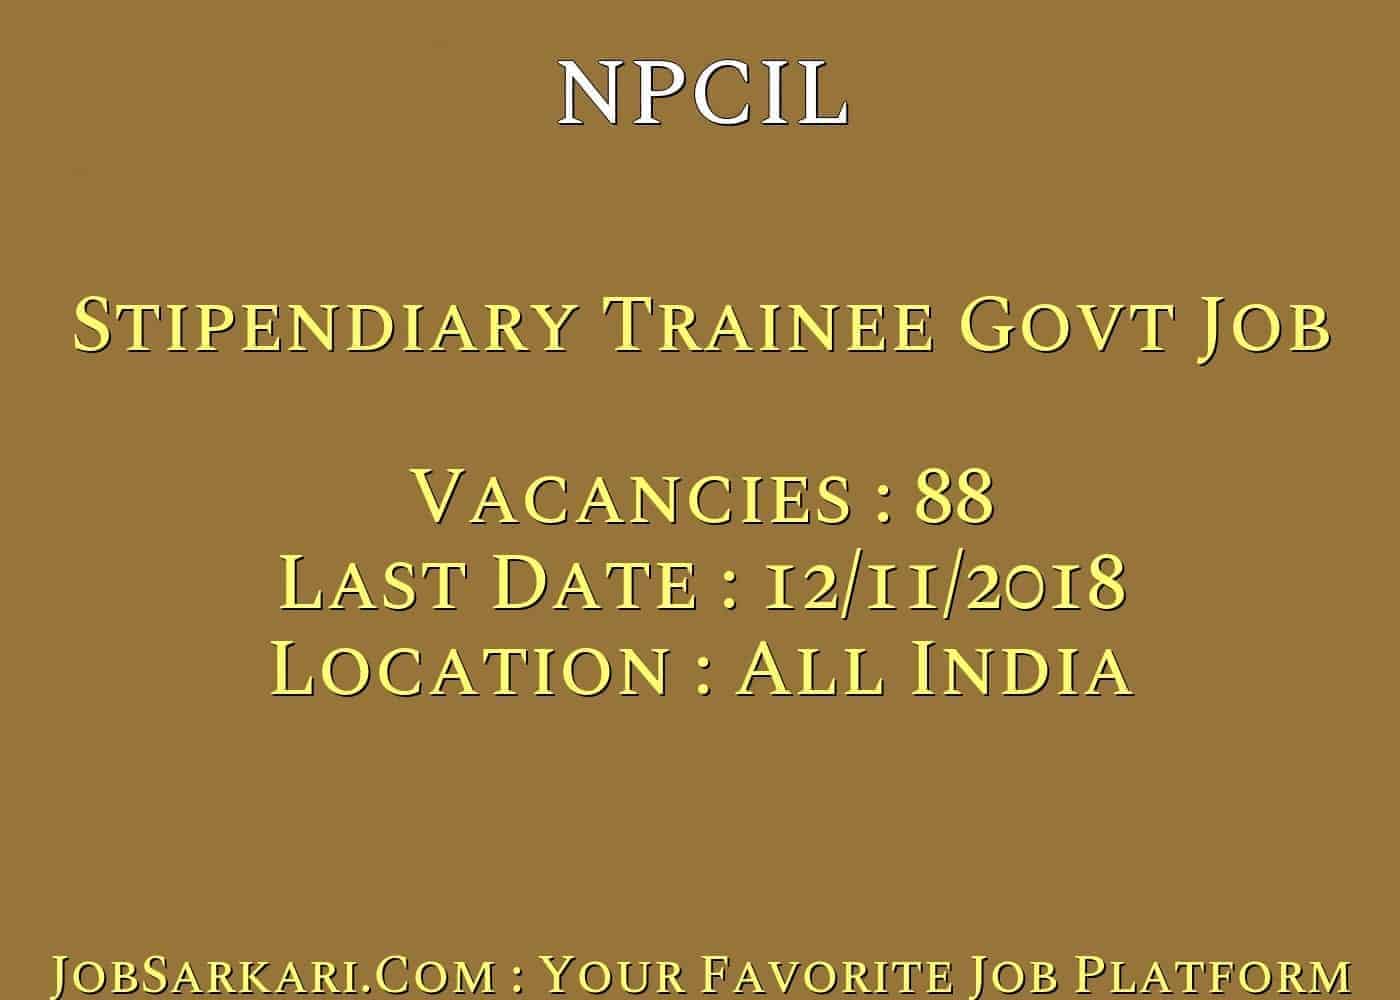 NPCIL Recruitment 2018 for Stipendiary Trainee Govt Job